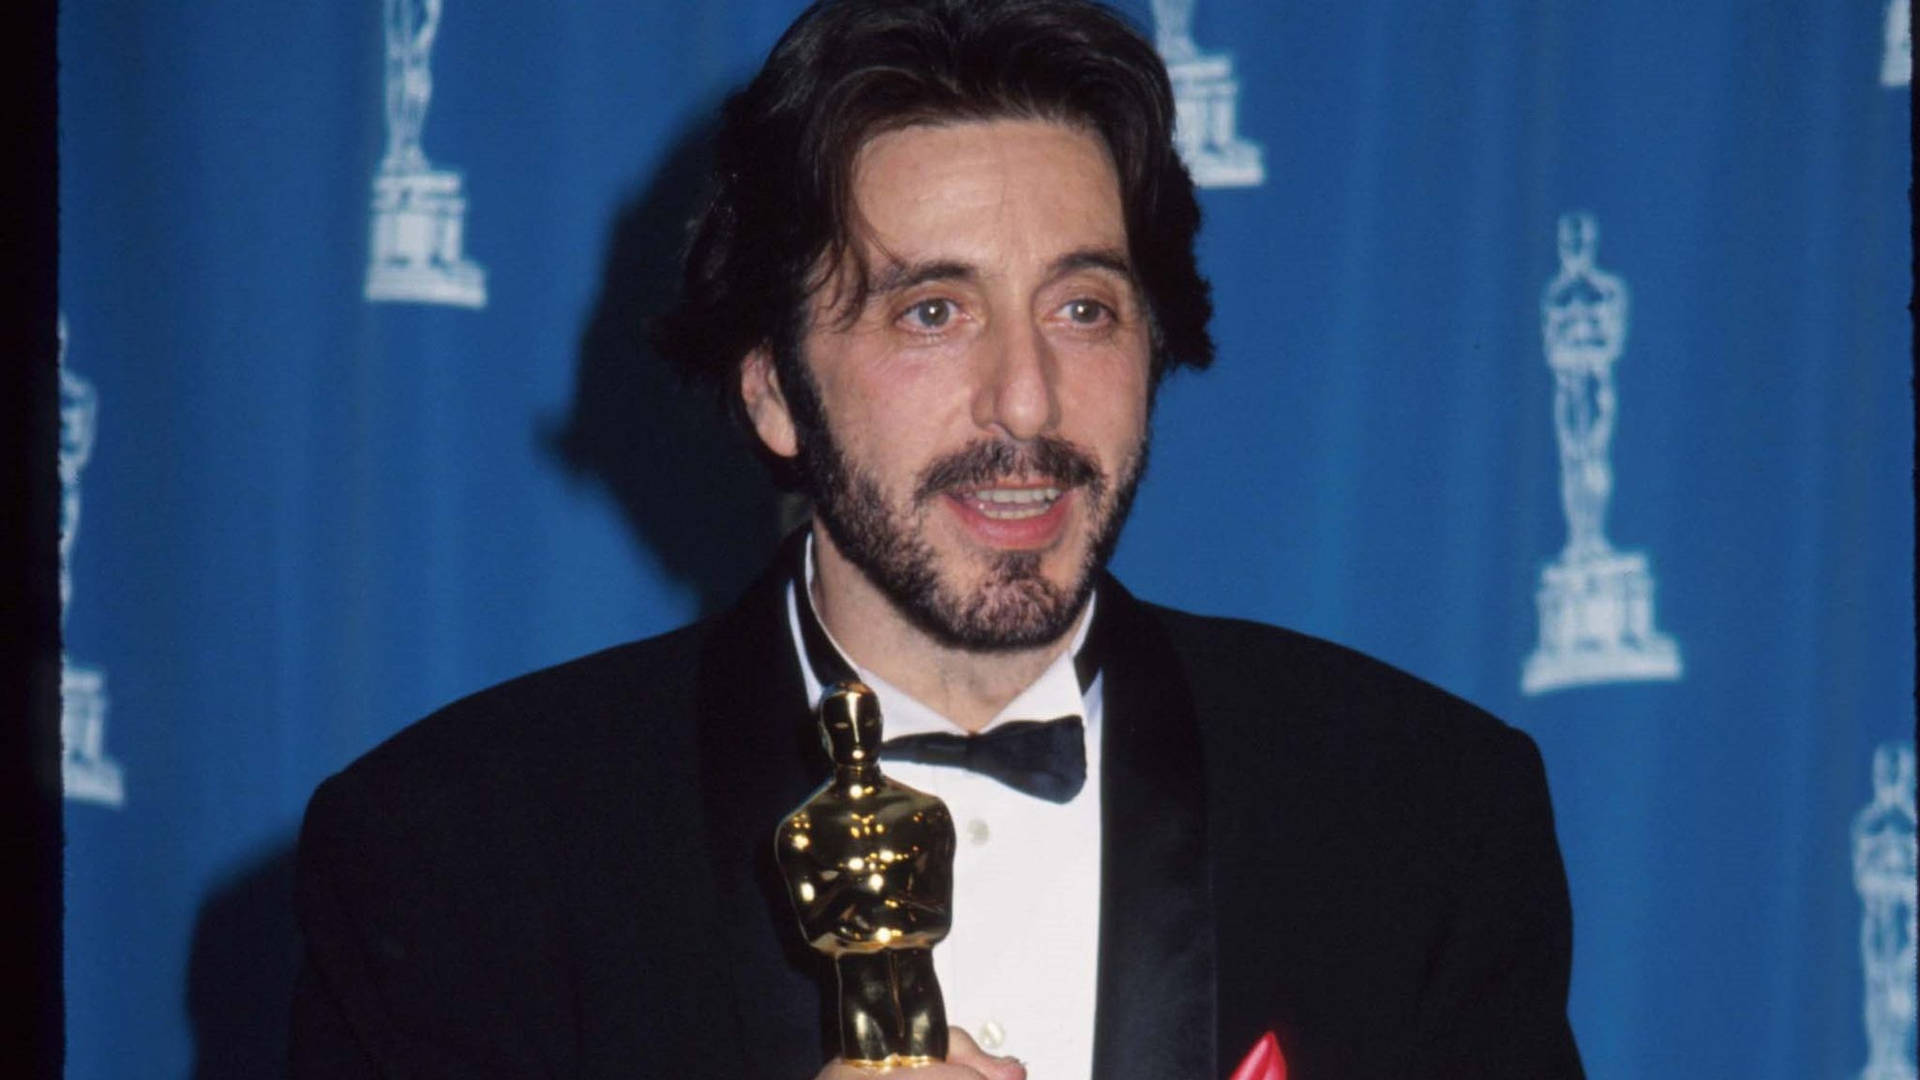 Al Pacino 65th Academy Awards Background